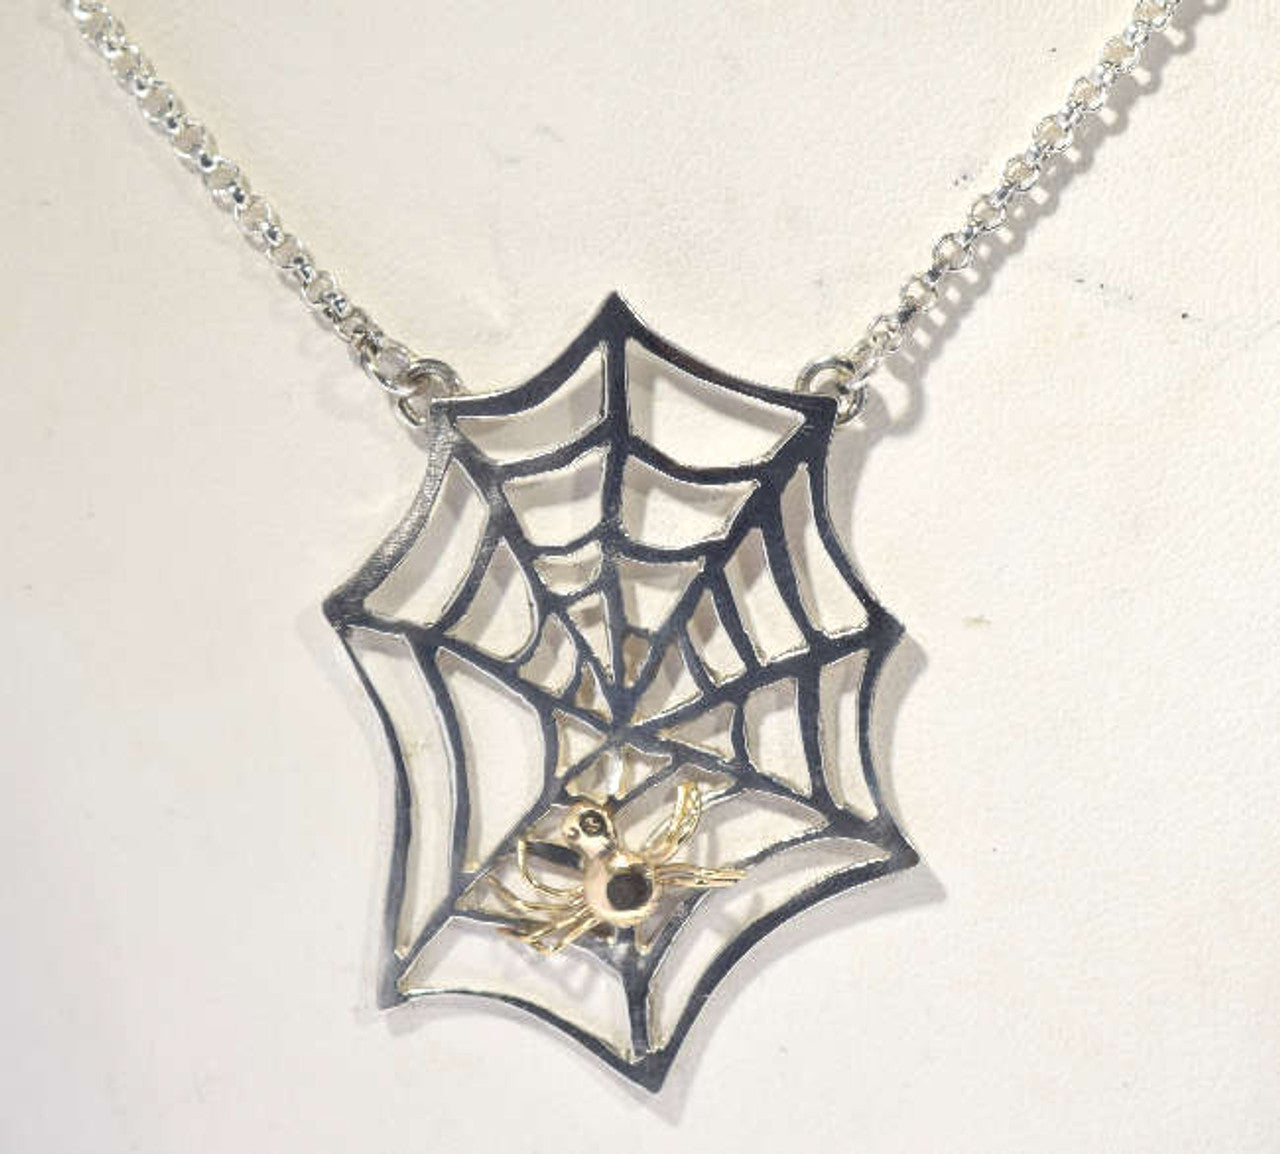 Single Cobweb Necklace